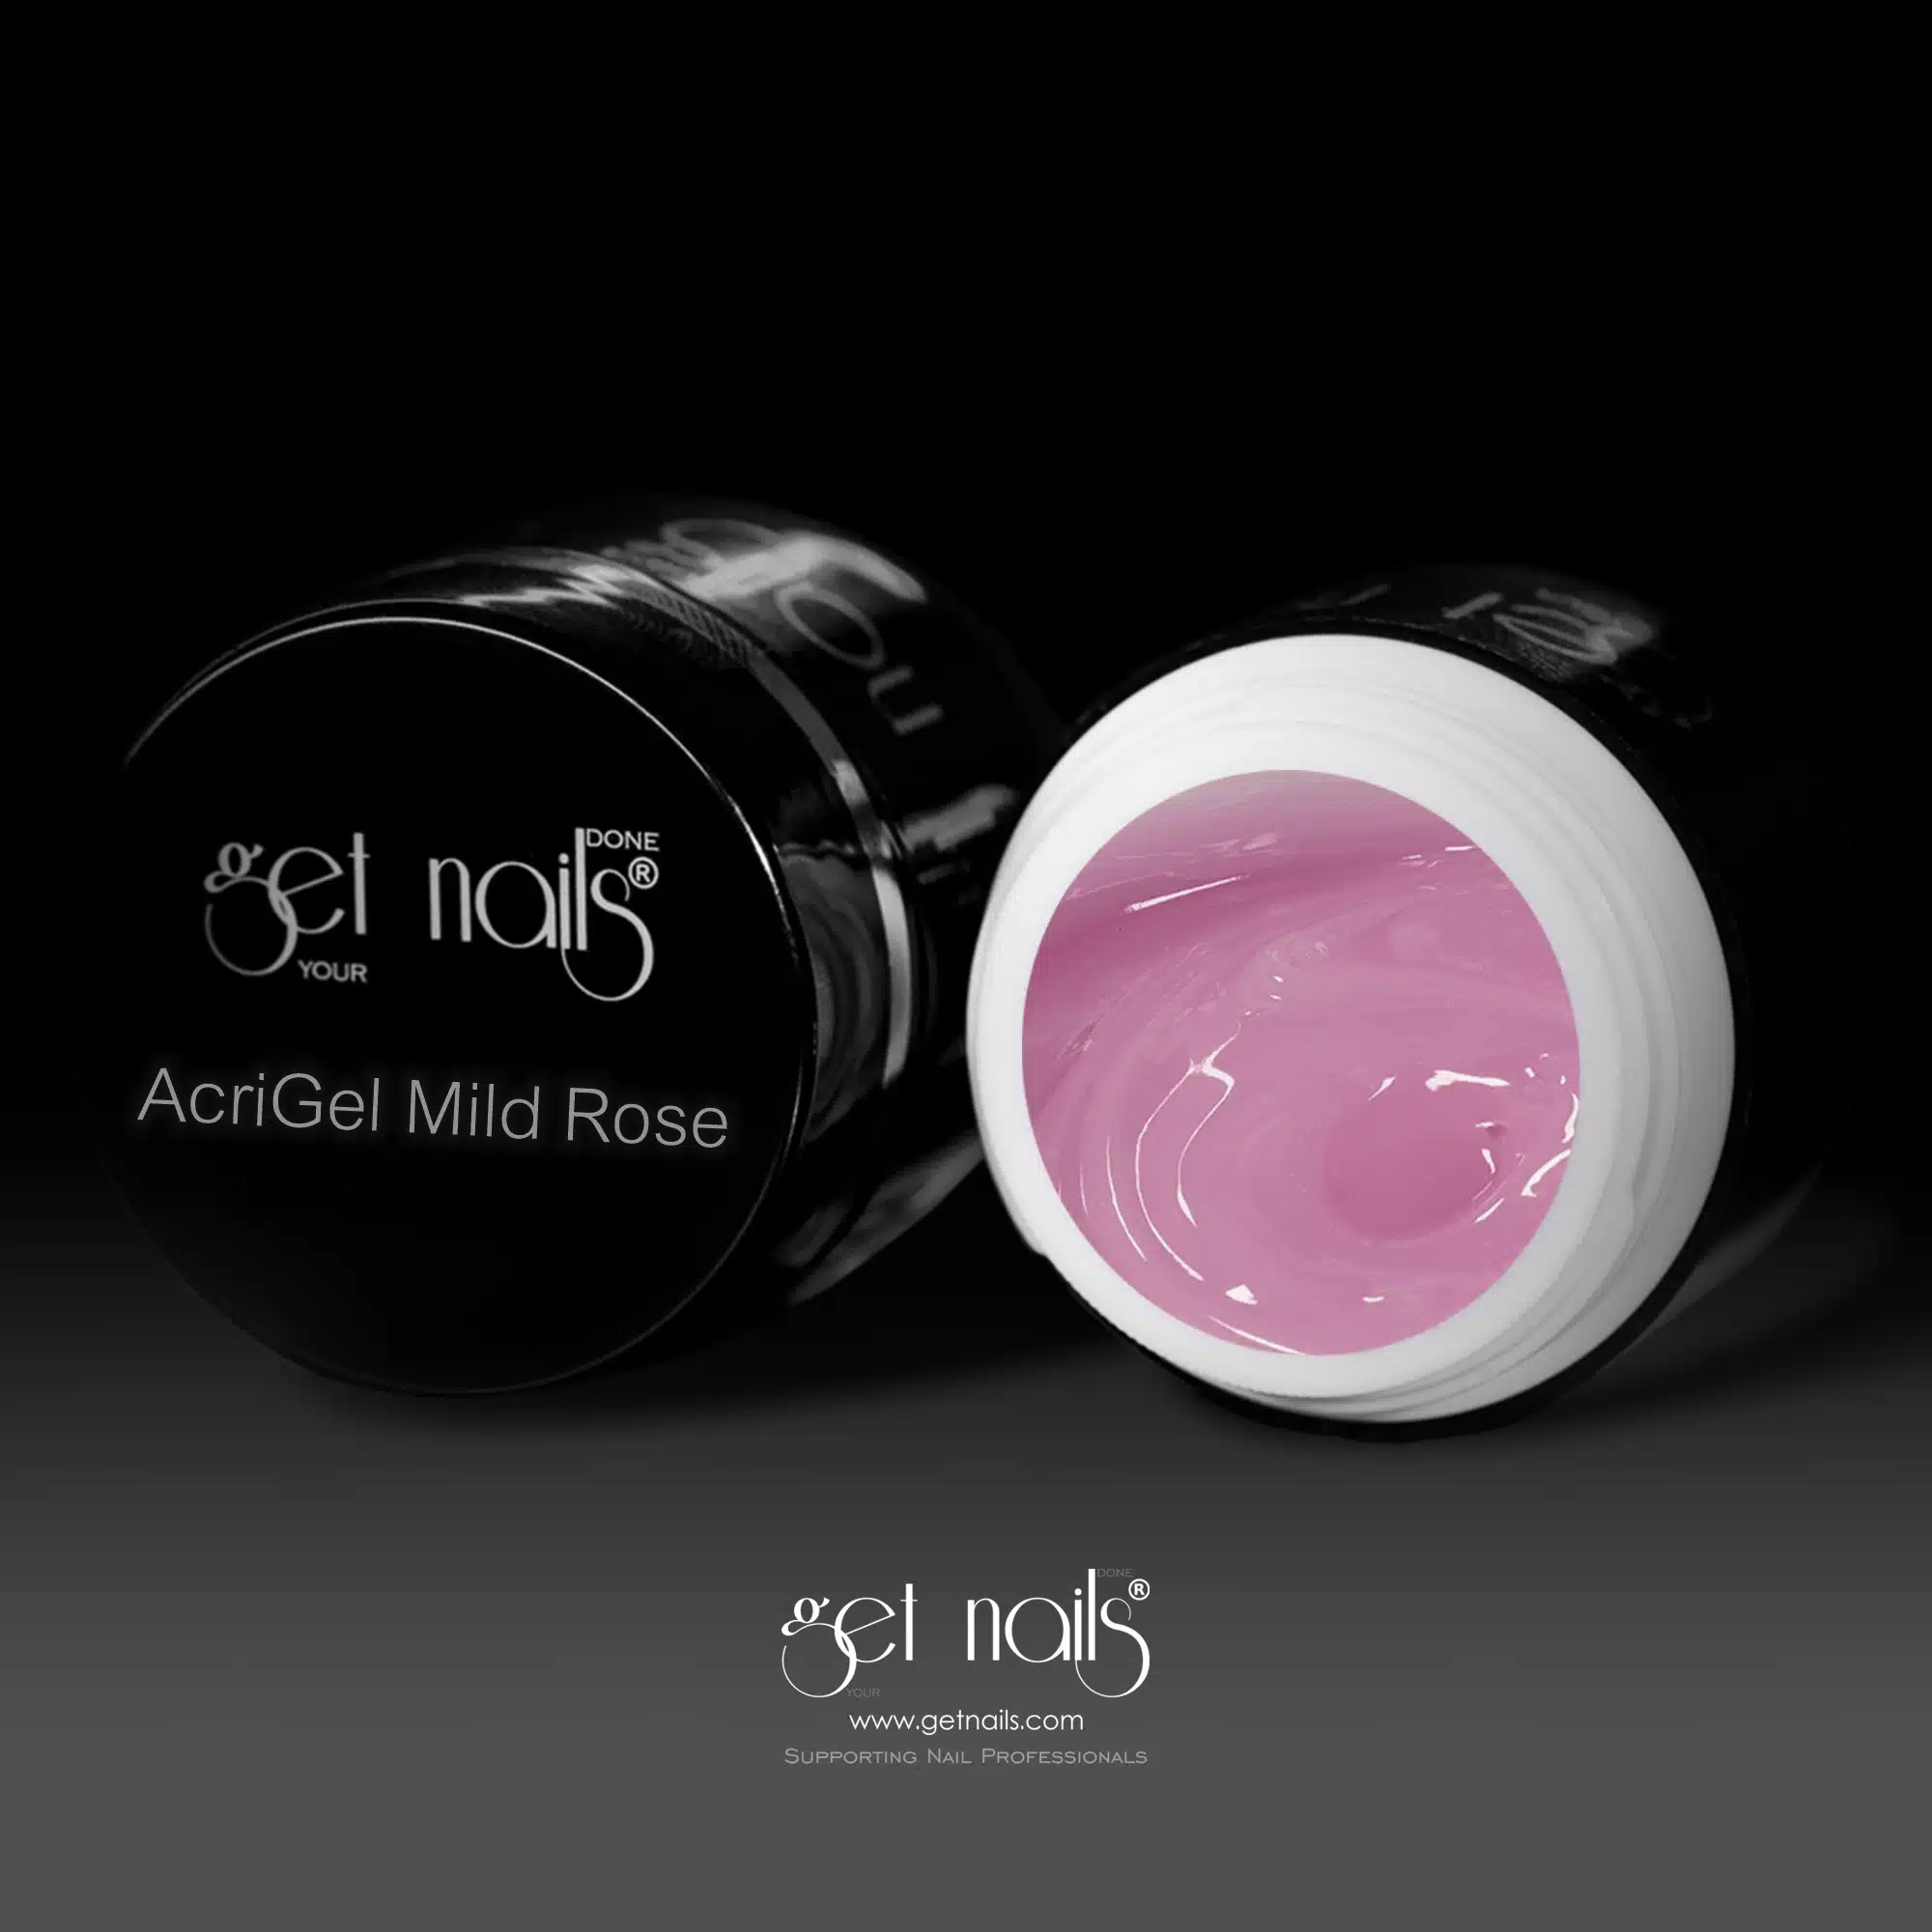 Get Nails Austria - Образец AcriGel Mild Rose